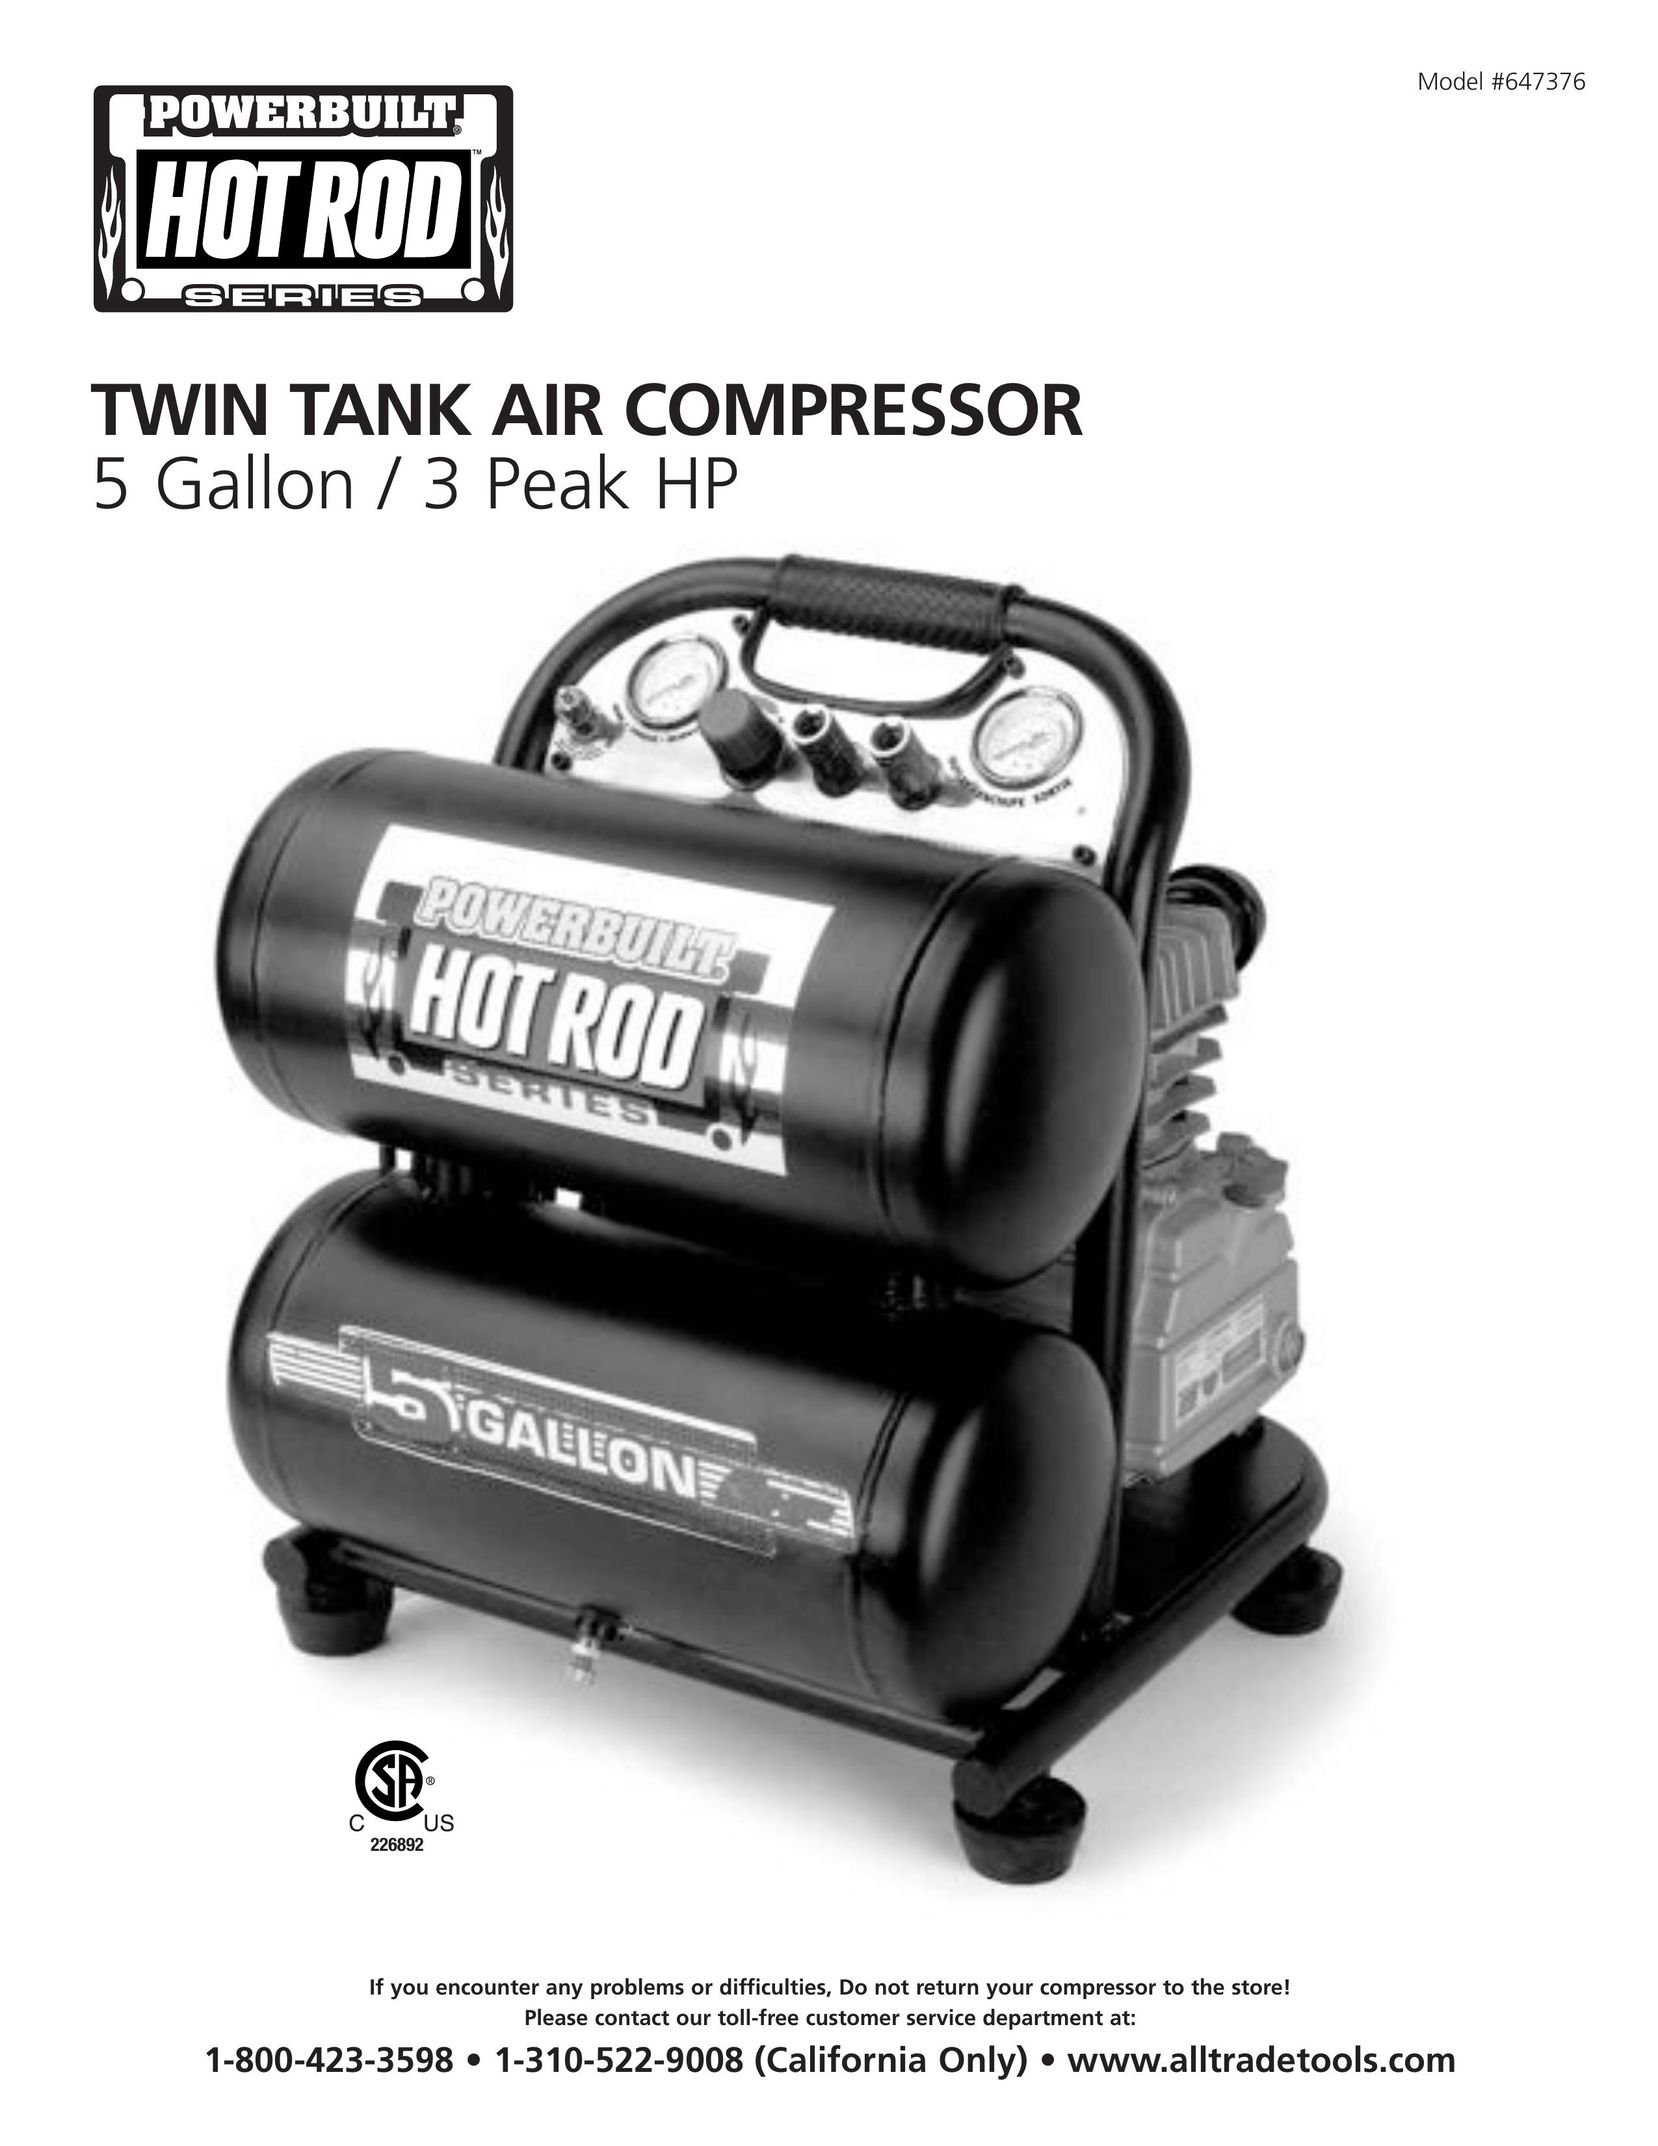 AllTrade 647376 Air Compressor User Manual